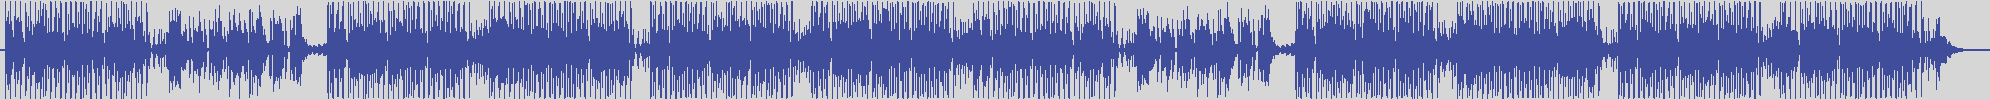 nf_boyz_records [NFY058] Ultranight - Refreshing [Deep Hole Mix] audio wave form